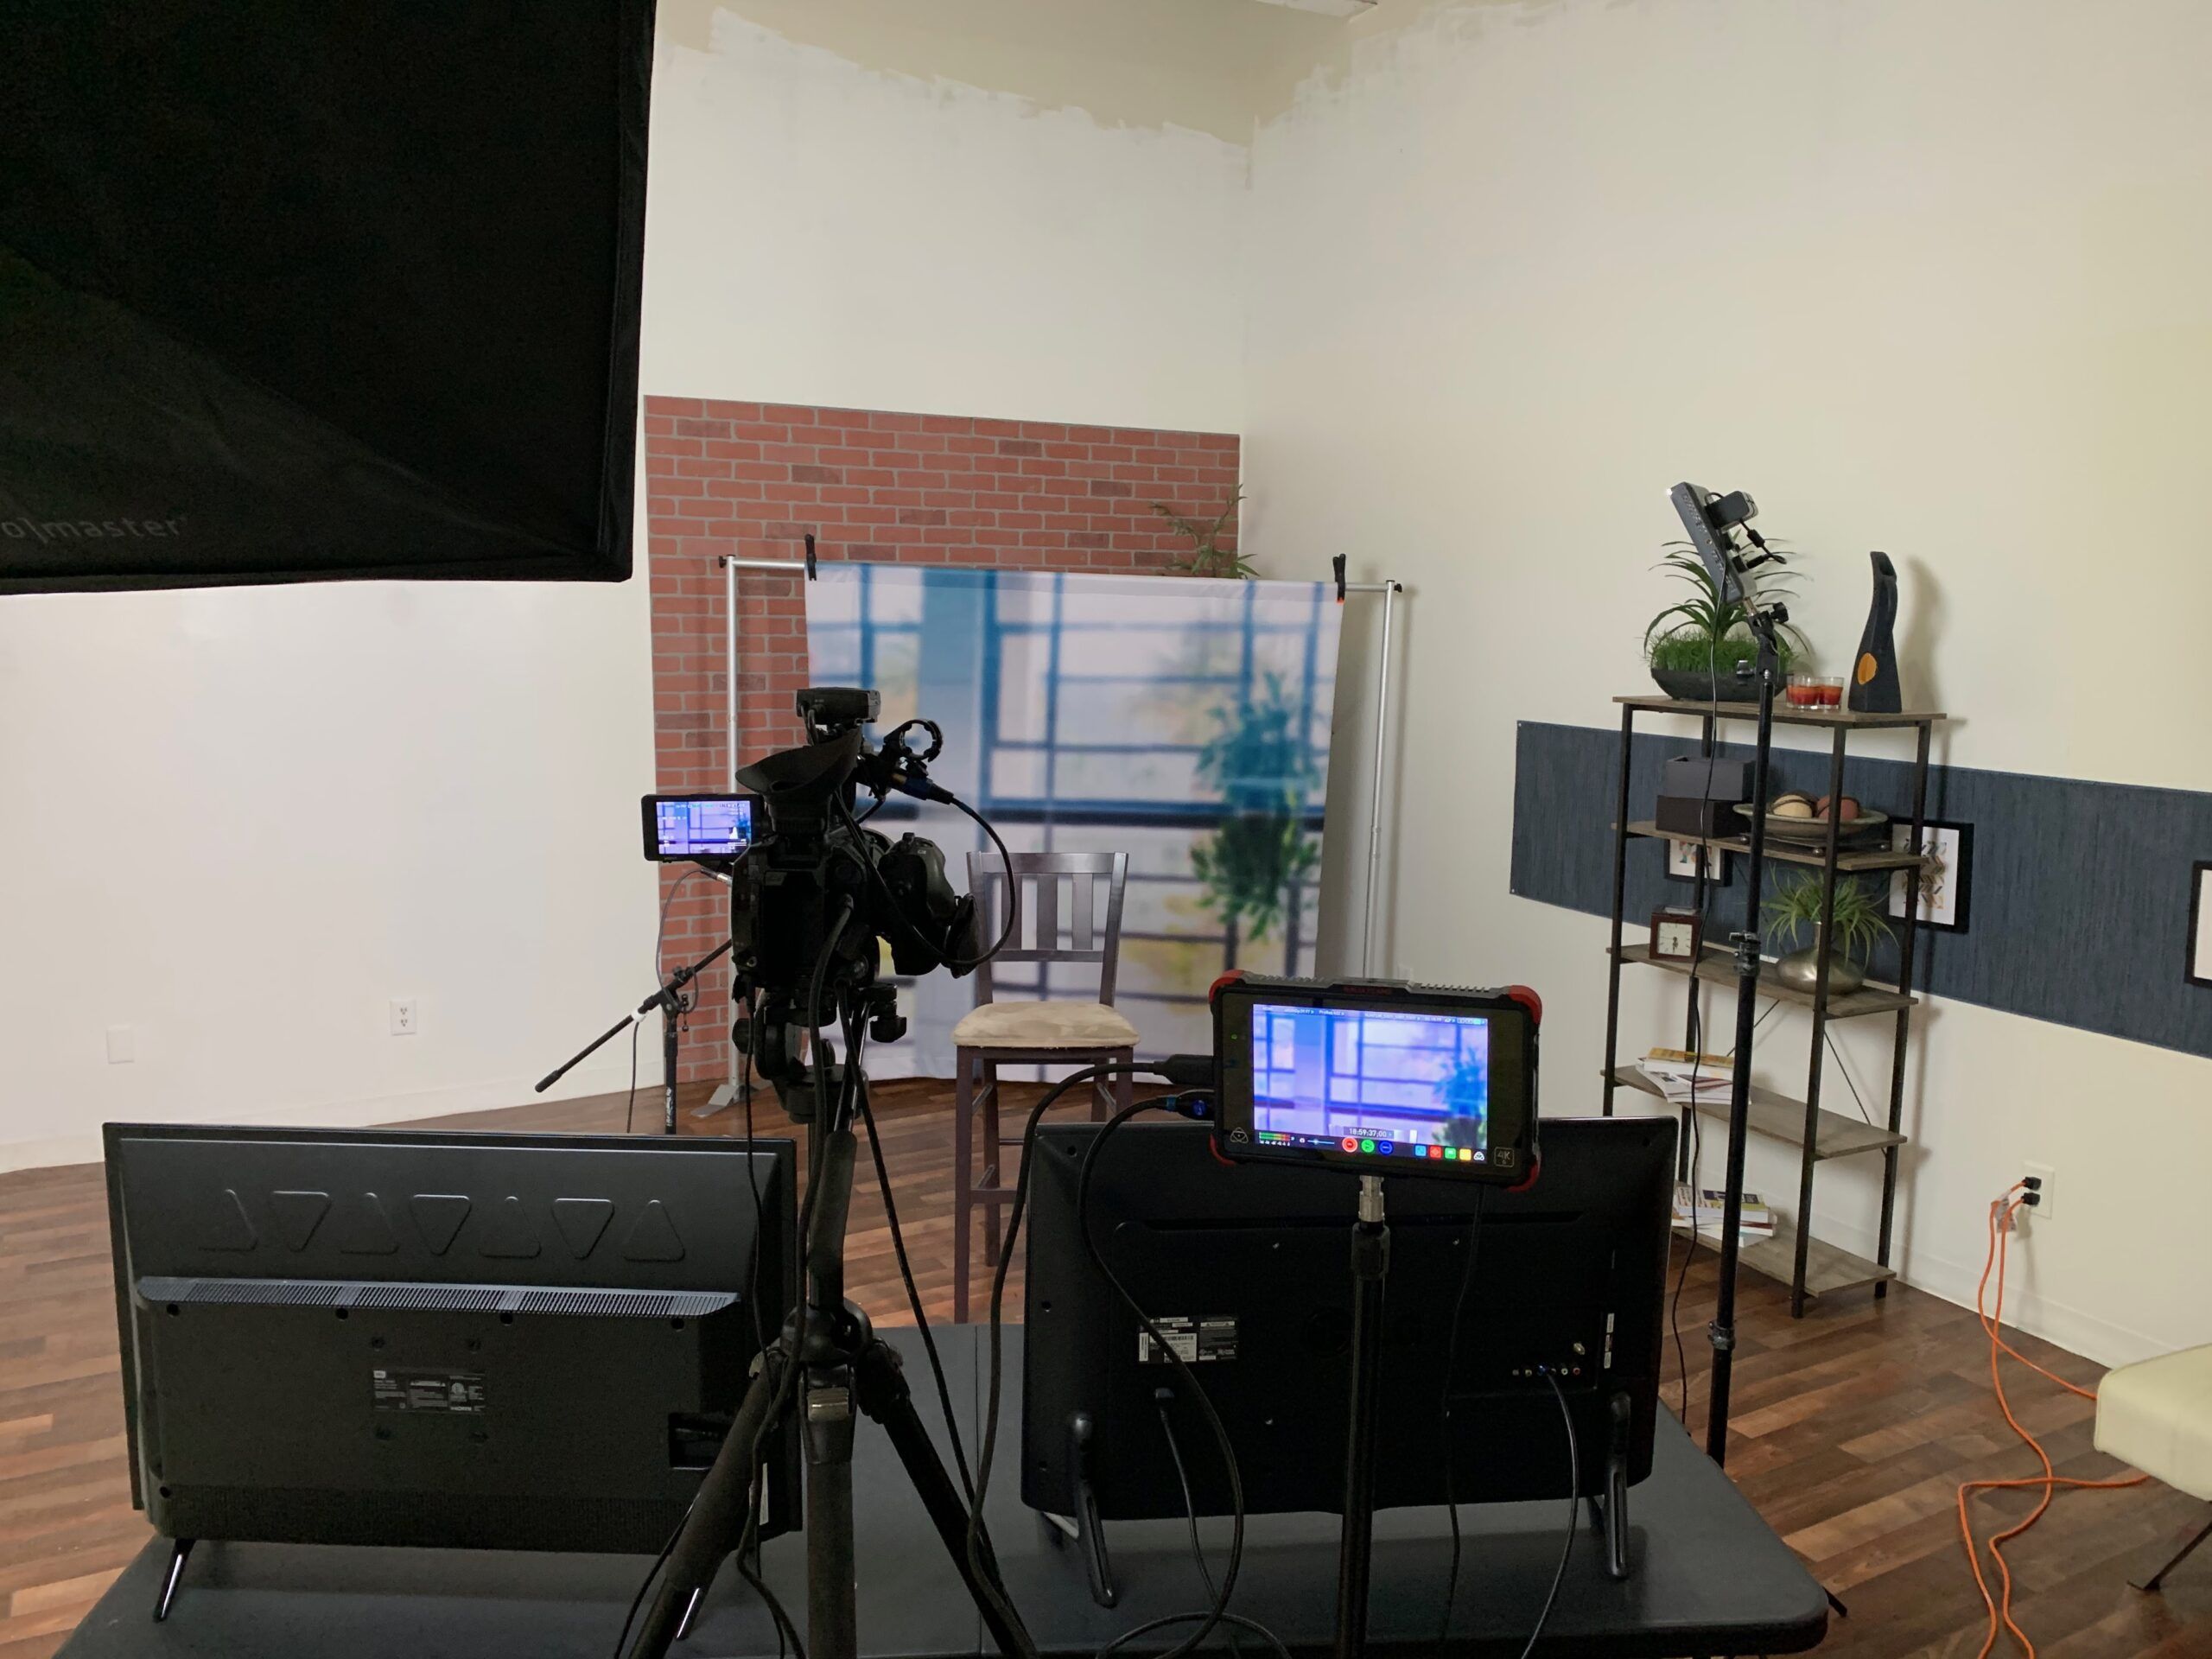 Studio set for live show broadcast